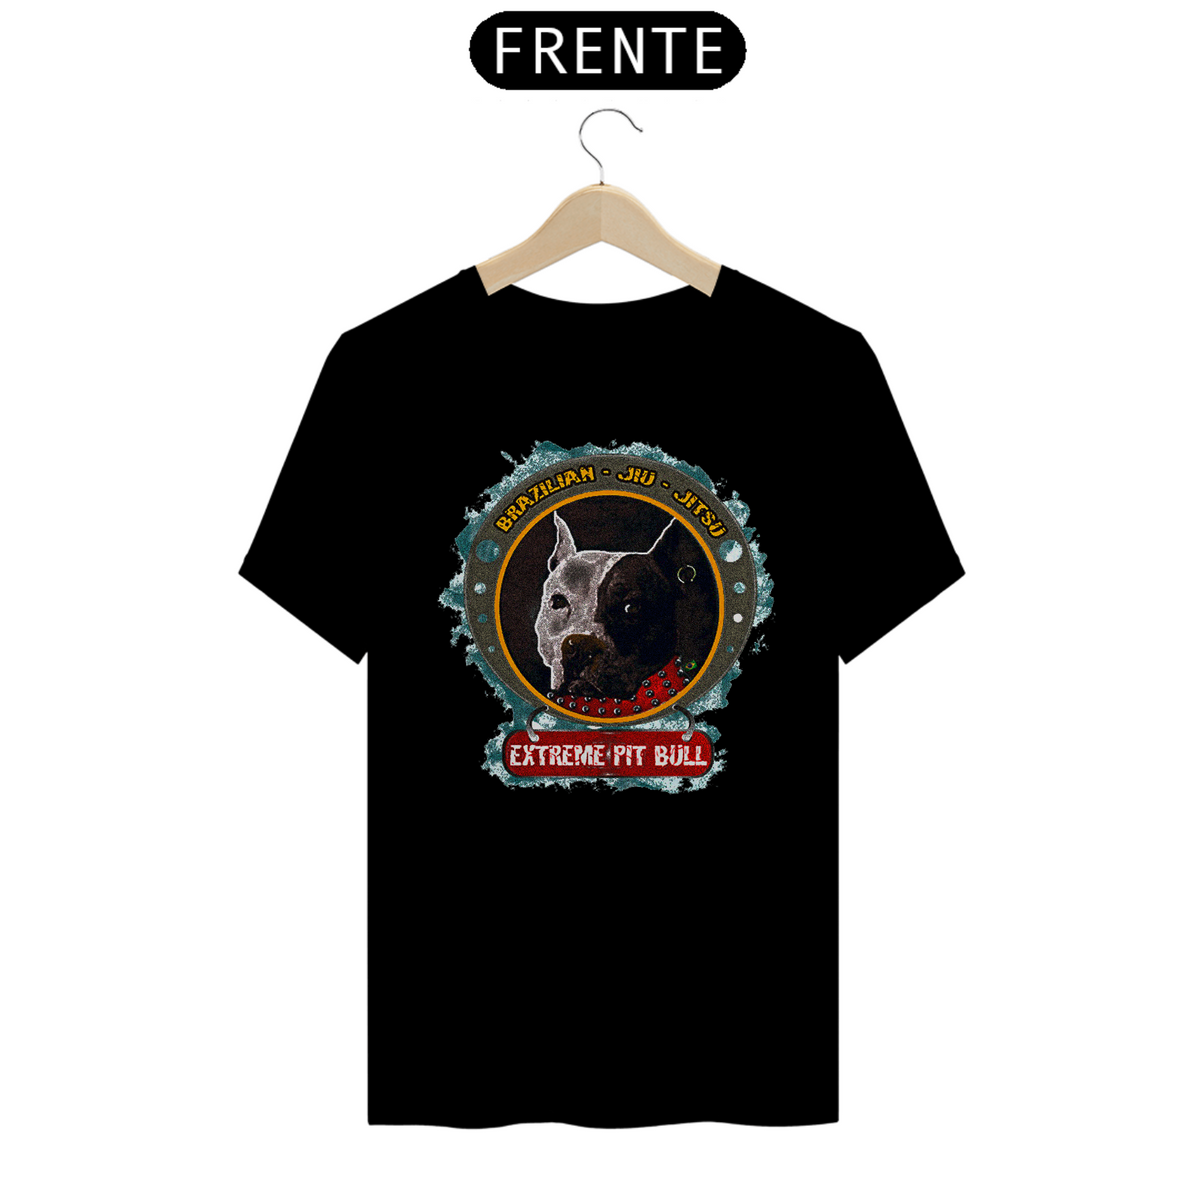 Nome do produto: Camiseta extreme Pit Bull jiu jitsu